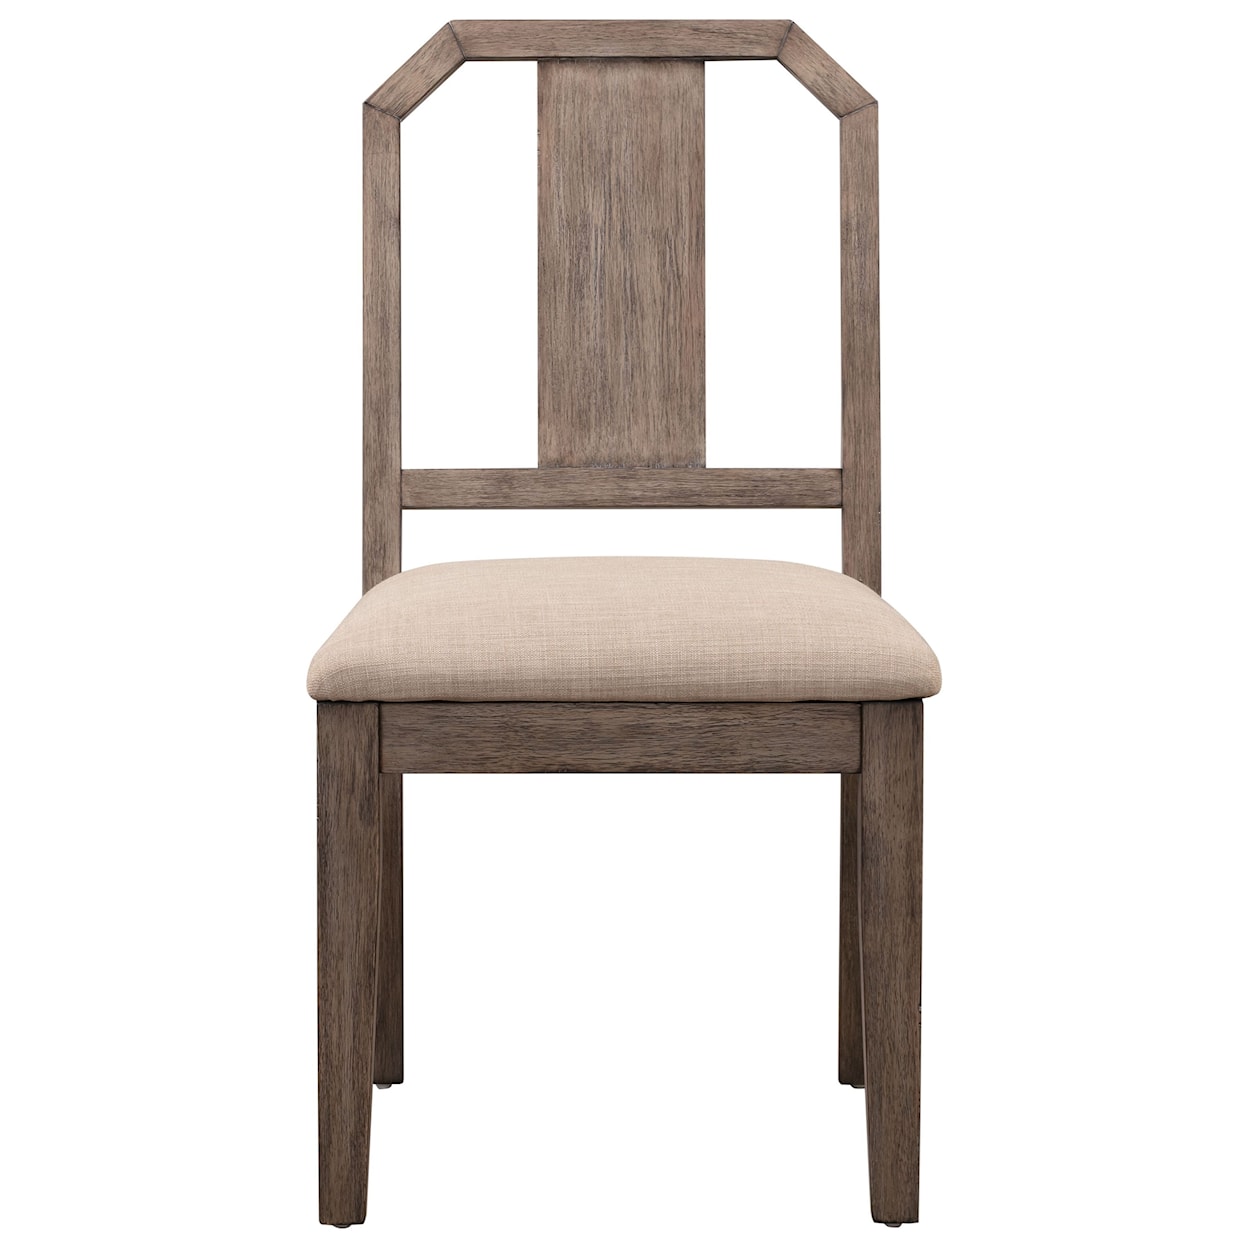 Modus International Acadia Upholstered Side Chair